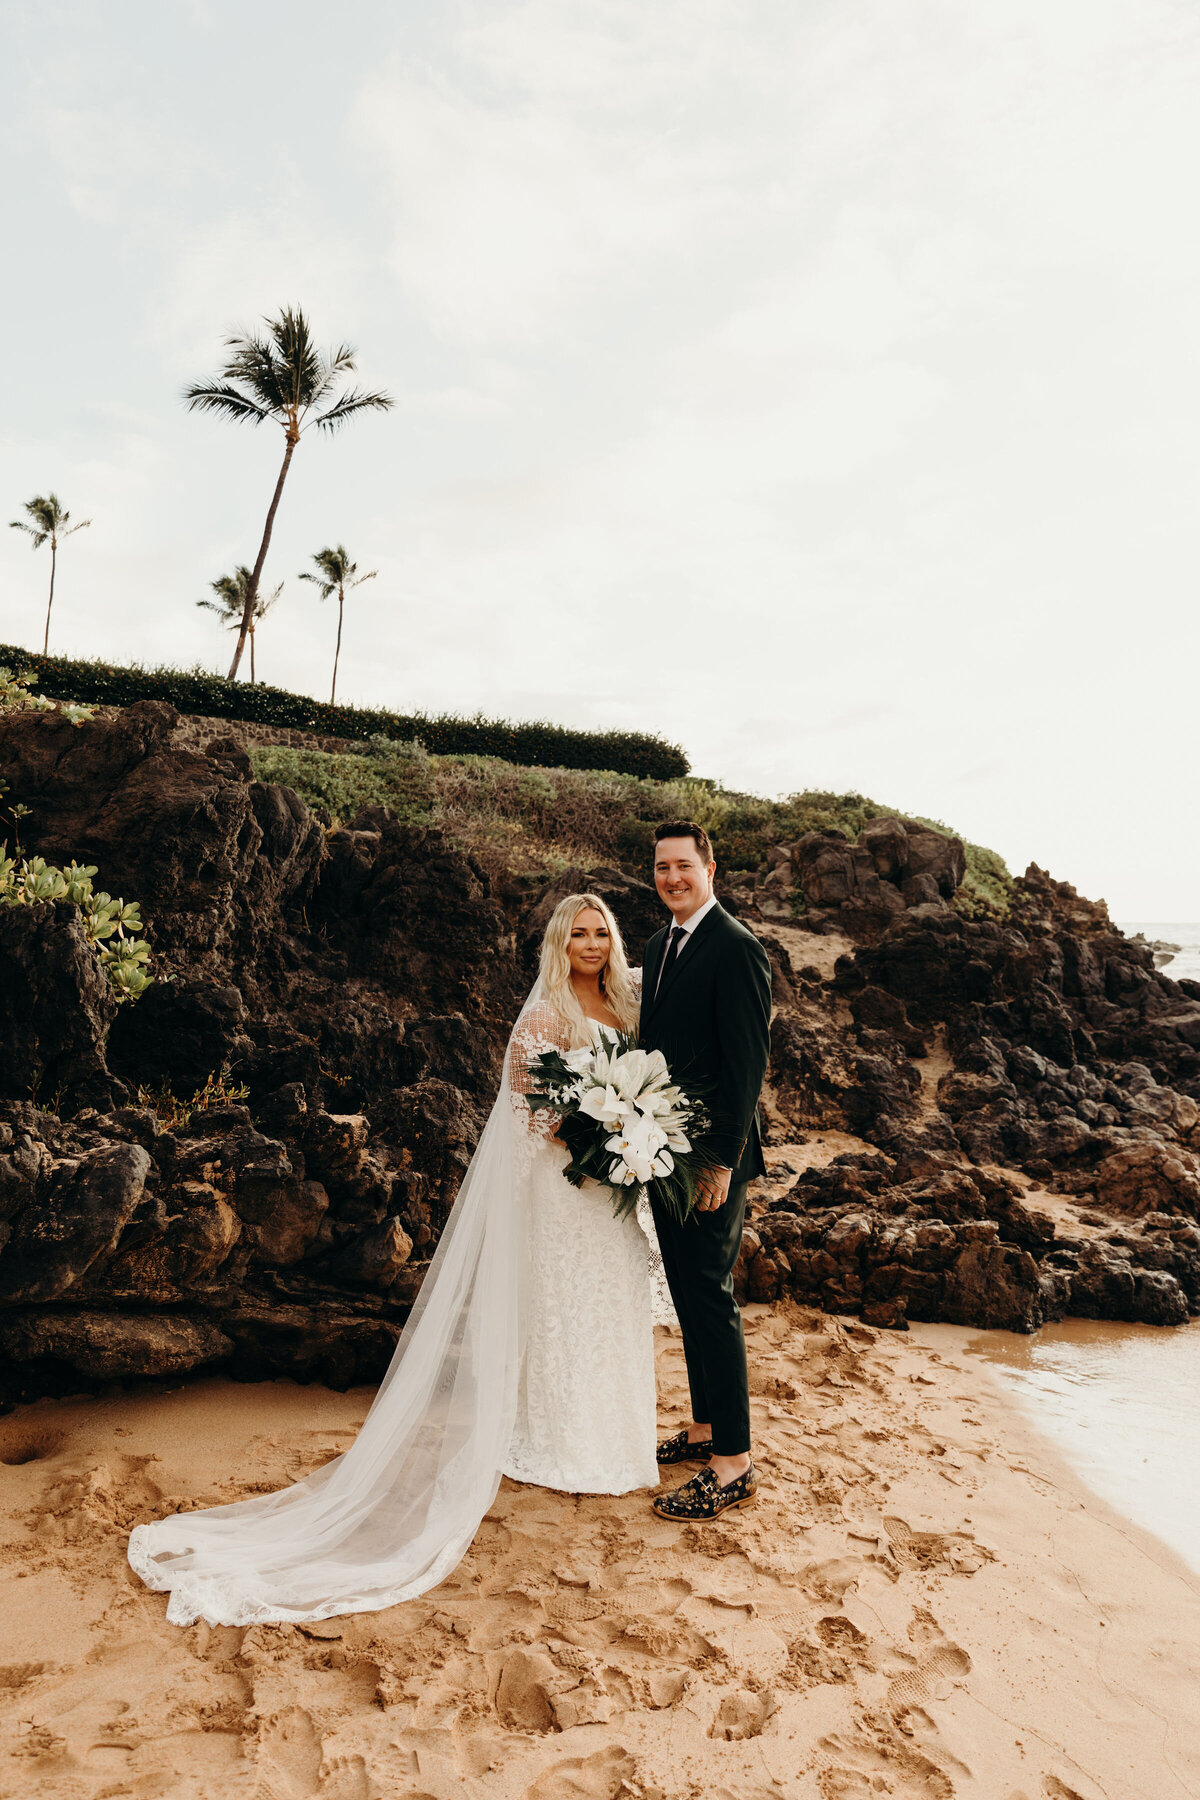 Maui Love Weddings and Events Maui Hawaii Full Service Wedding Planning Coordinating Event Design Company Destination Wedding 1